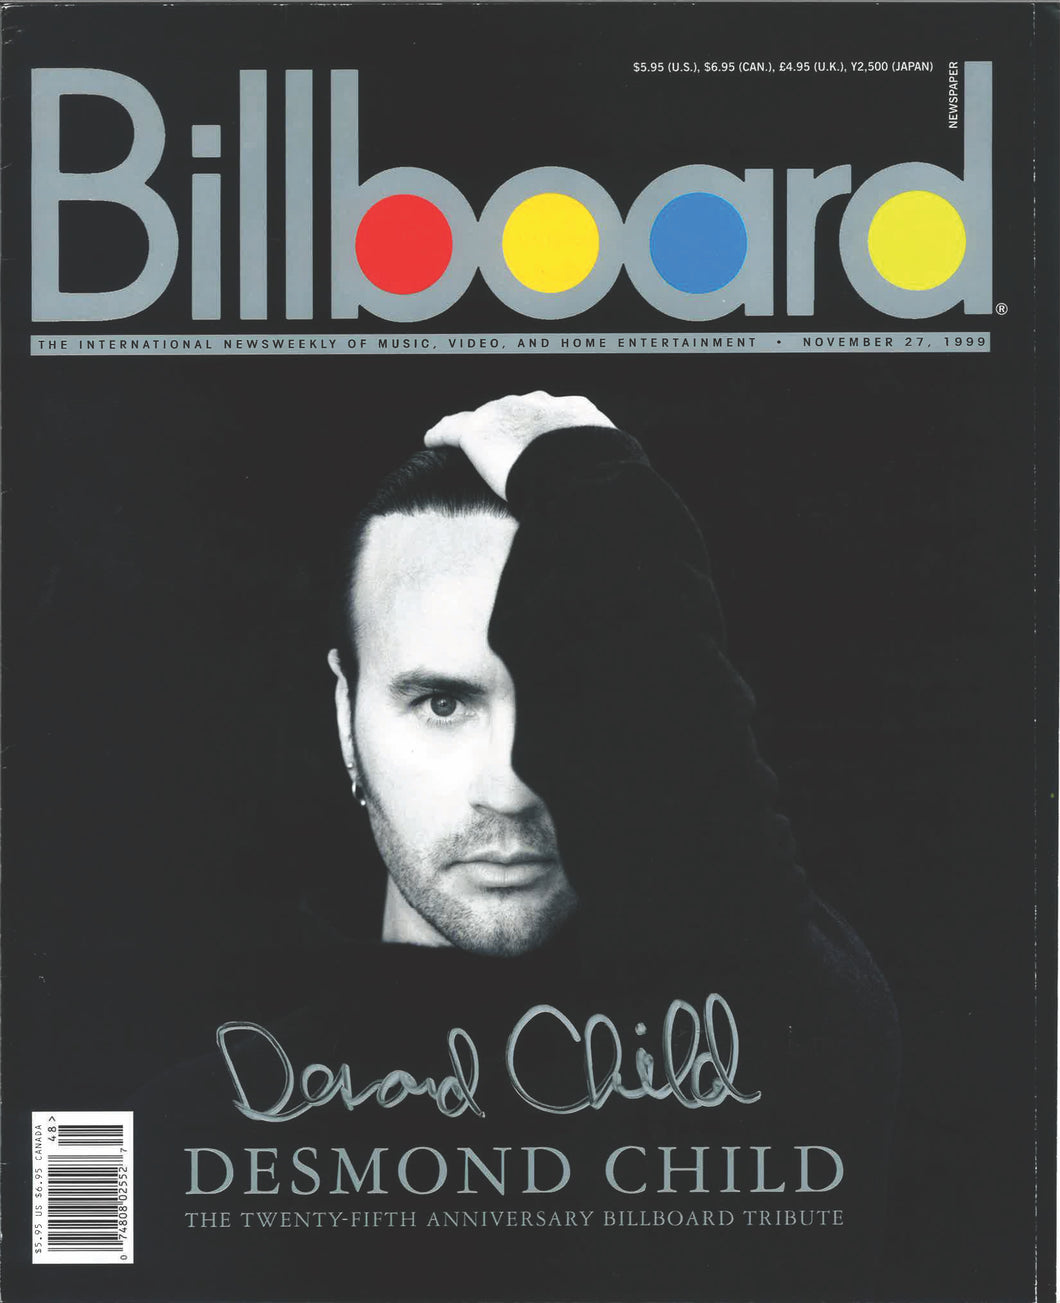 DESMOND CHILD Autographed Billboard Cover 1999